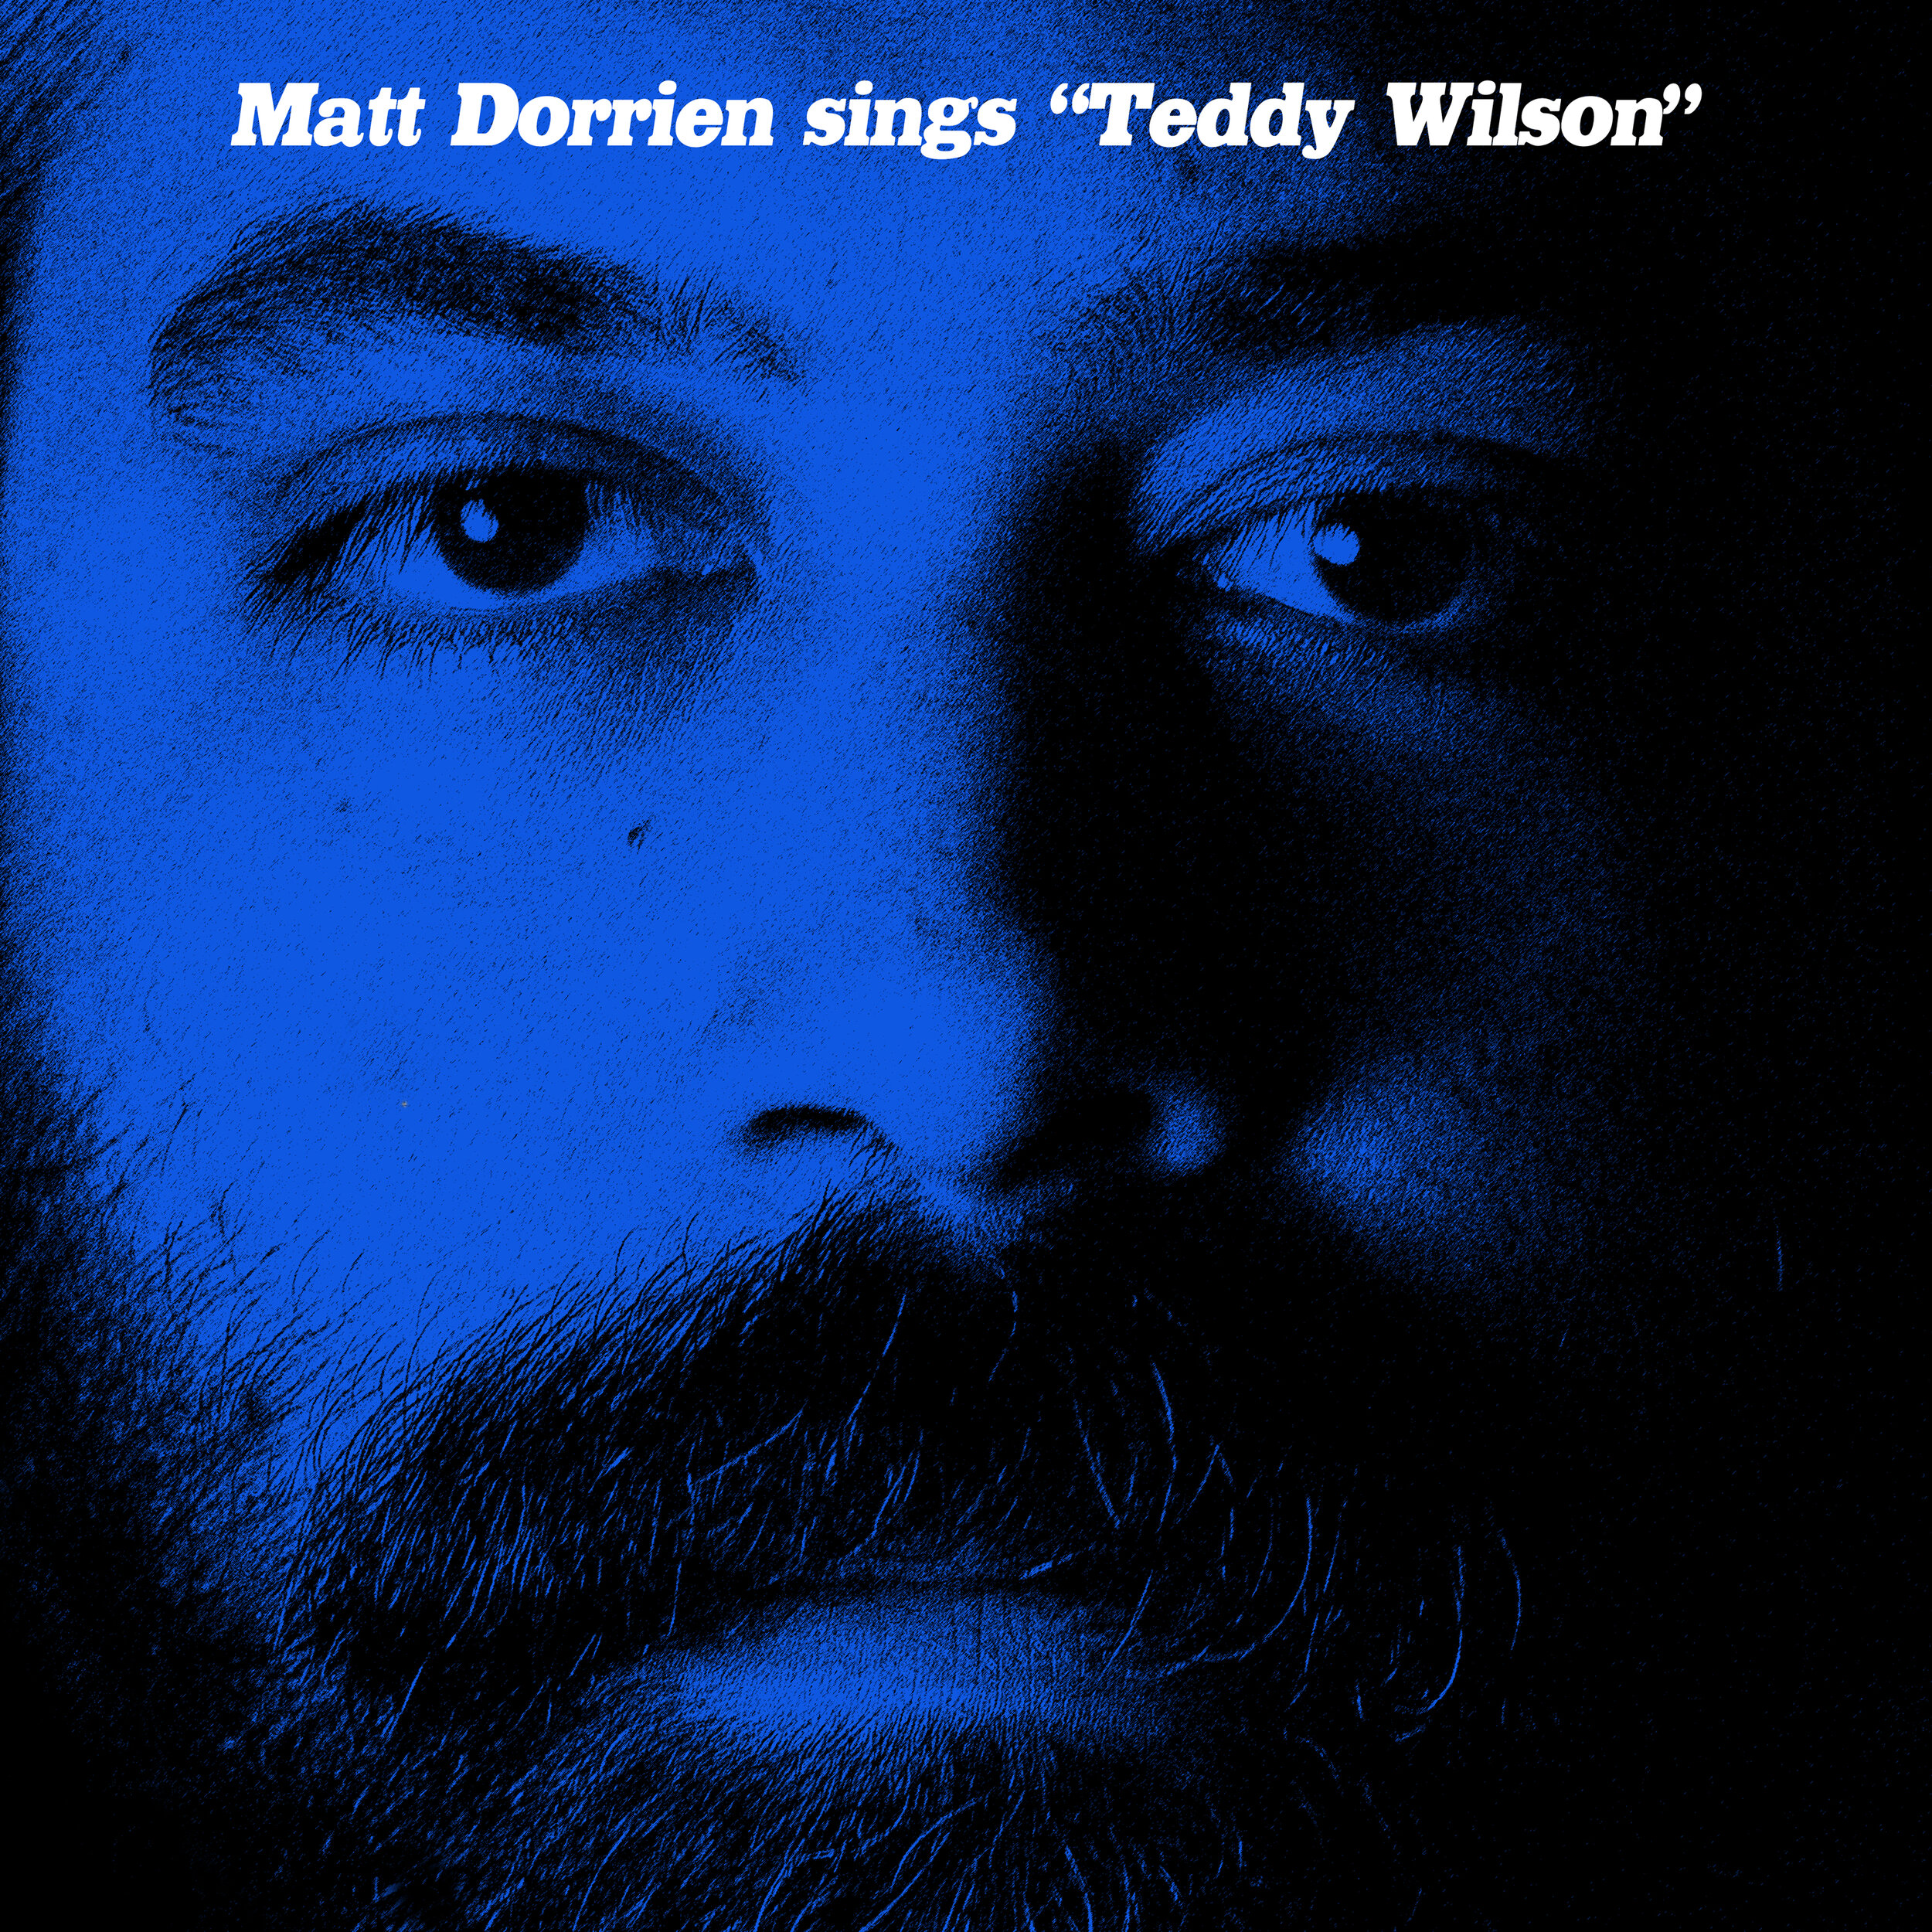 Matt Dorrien - "Teddy Wilson"